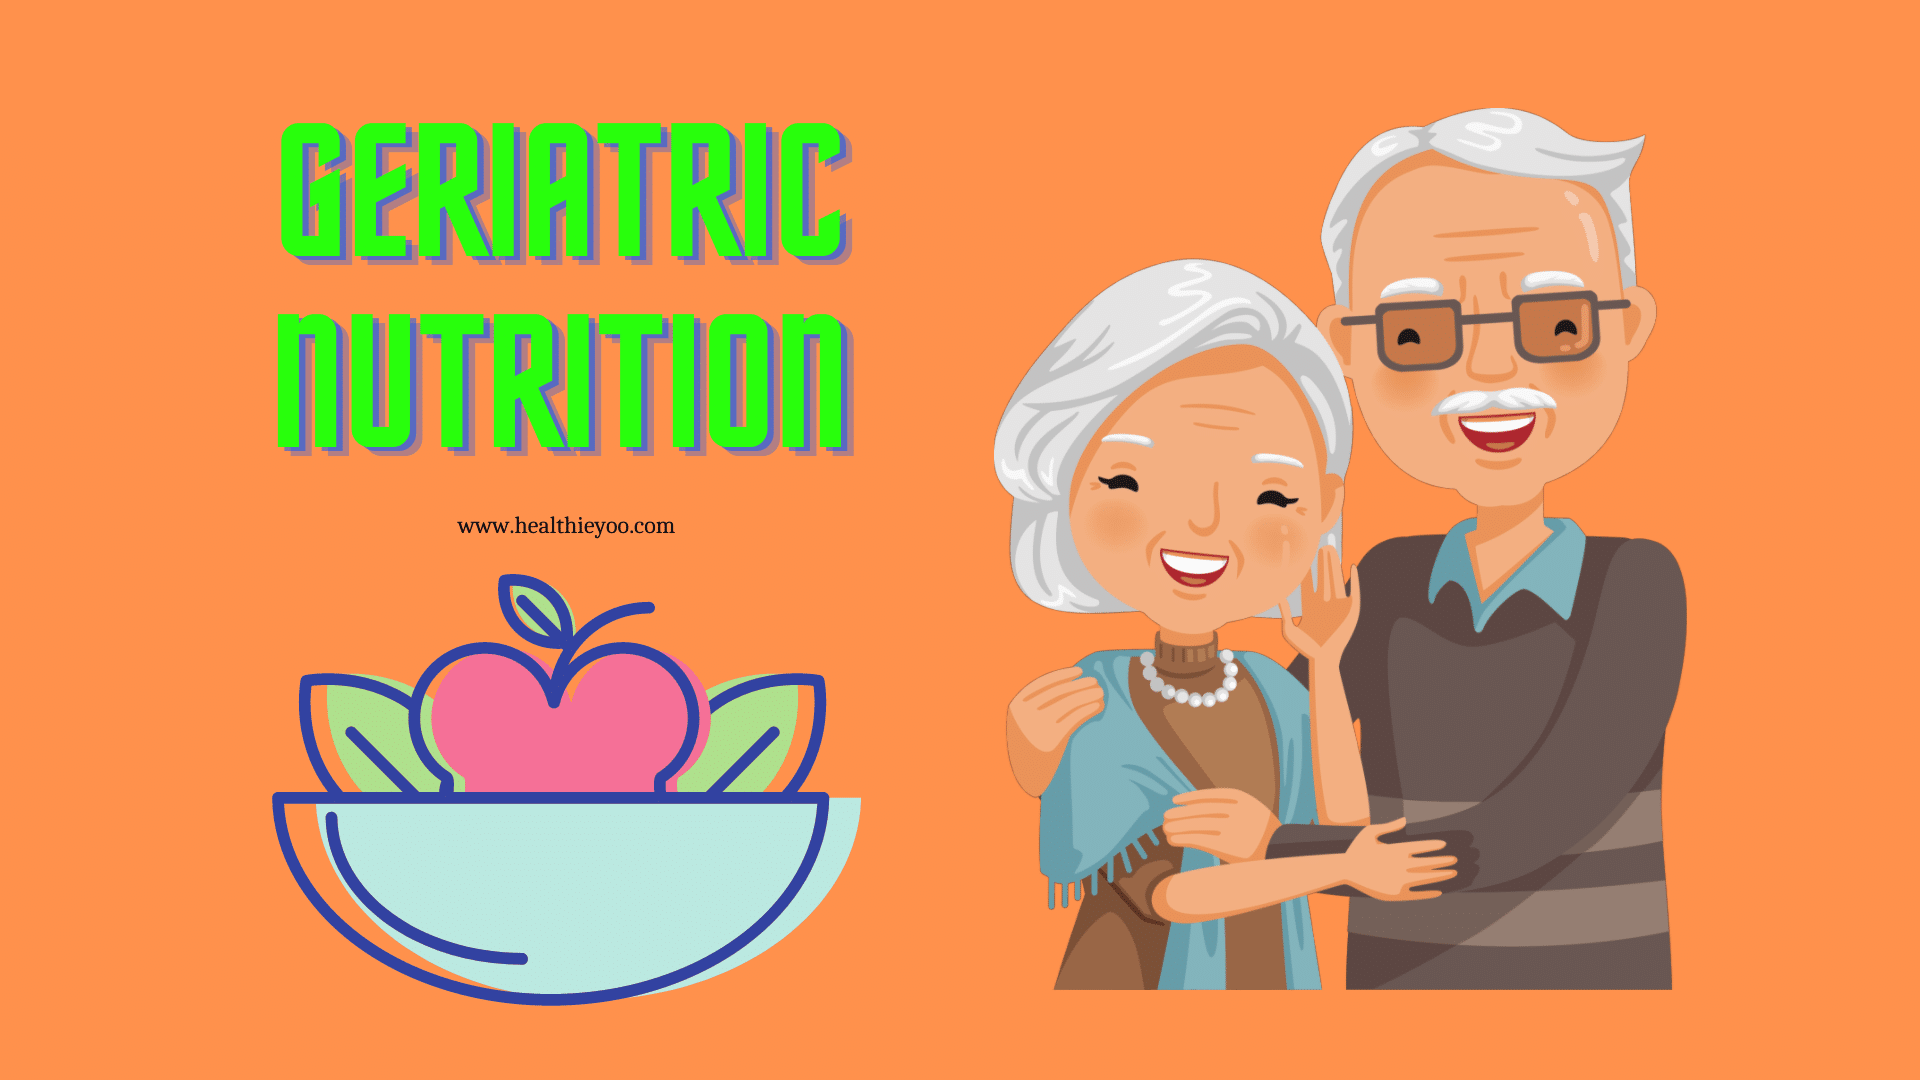 https://www.healthieyoo.com/wp-content/uploads/2023/02/geriatric-nutrition-2.png